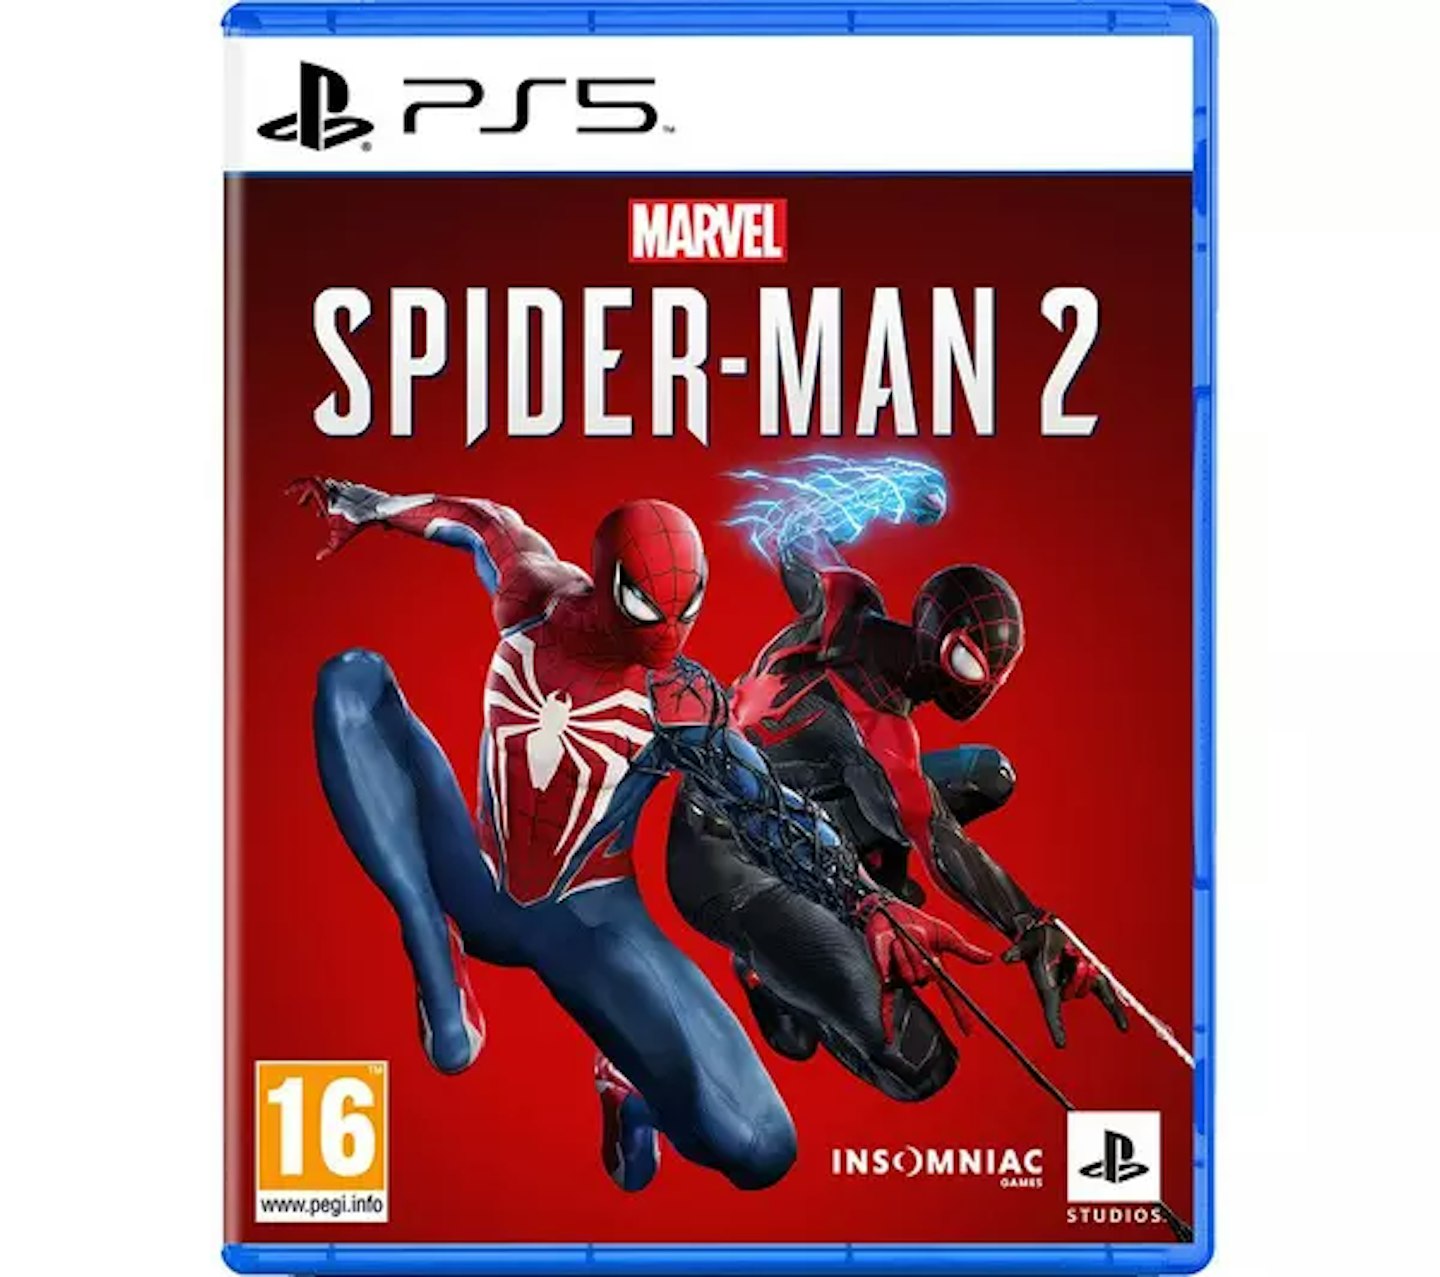 Marvel’s Spider-Man 2 PS5 game